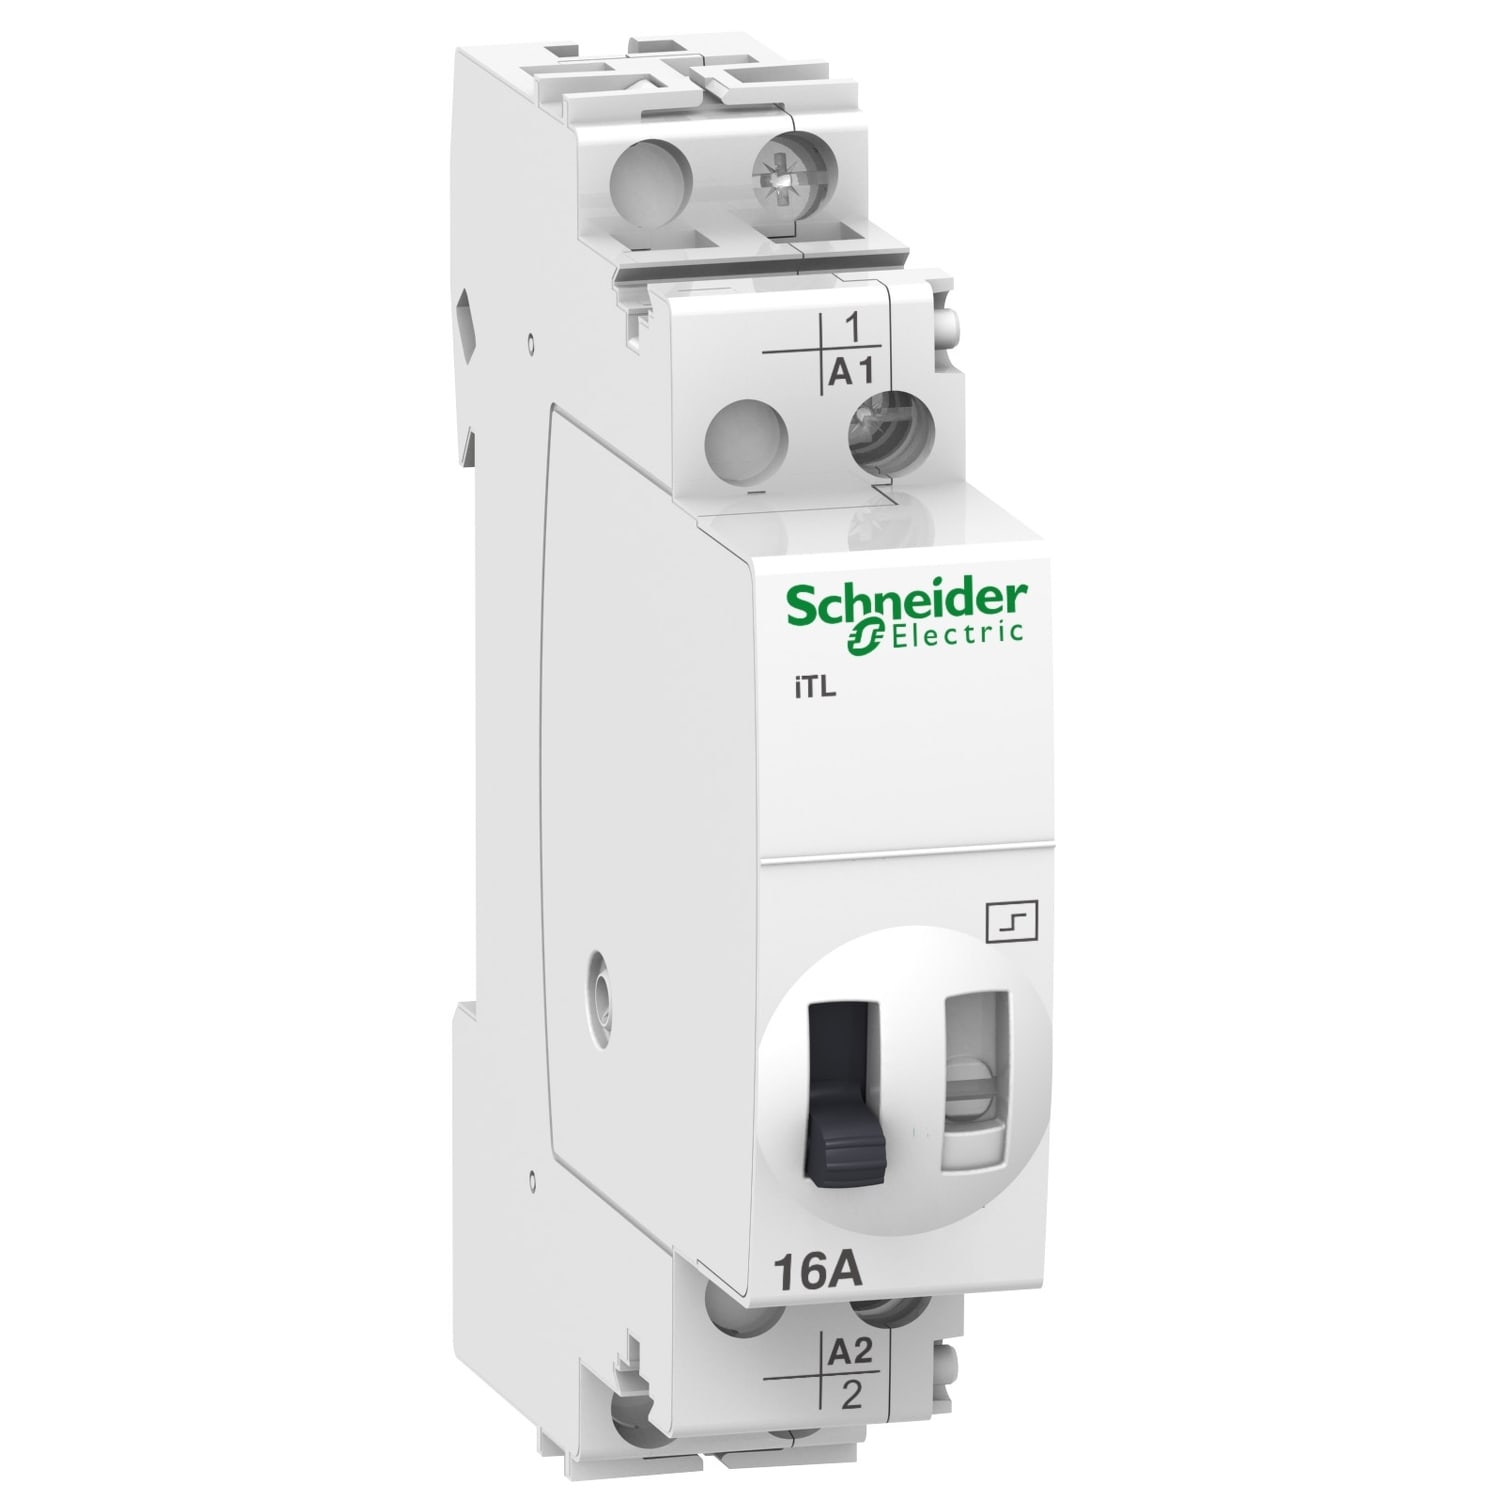 Schneider Electric - Acti9, iTL telerupteur 16A 1NO 24VCA 12VCC 50-60Hz